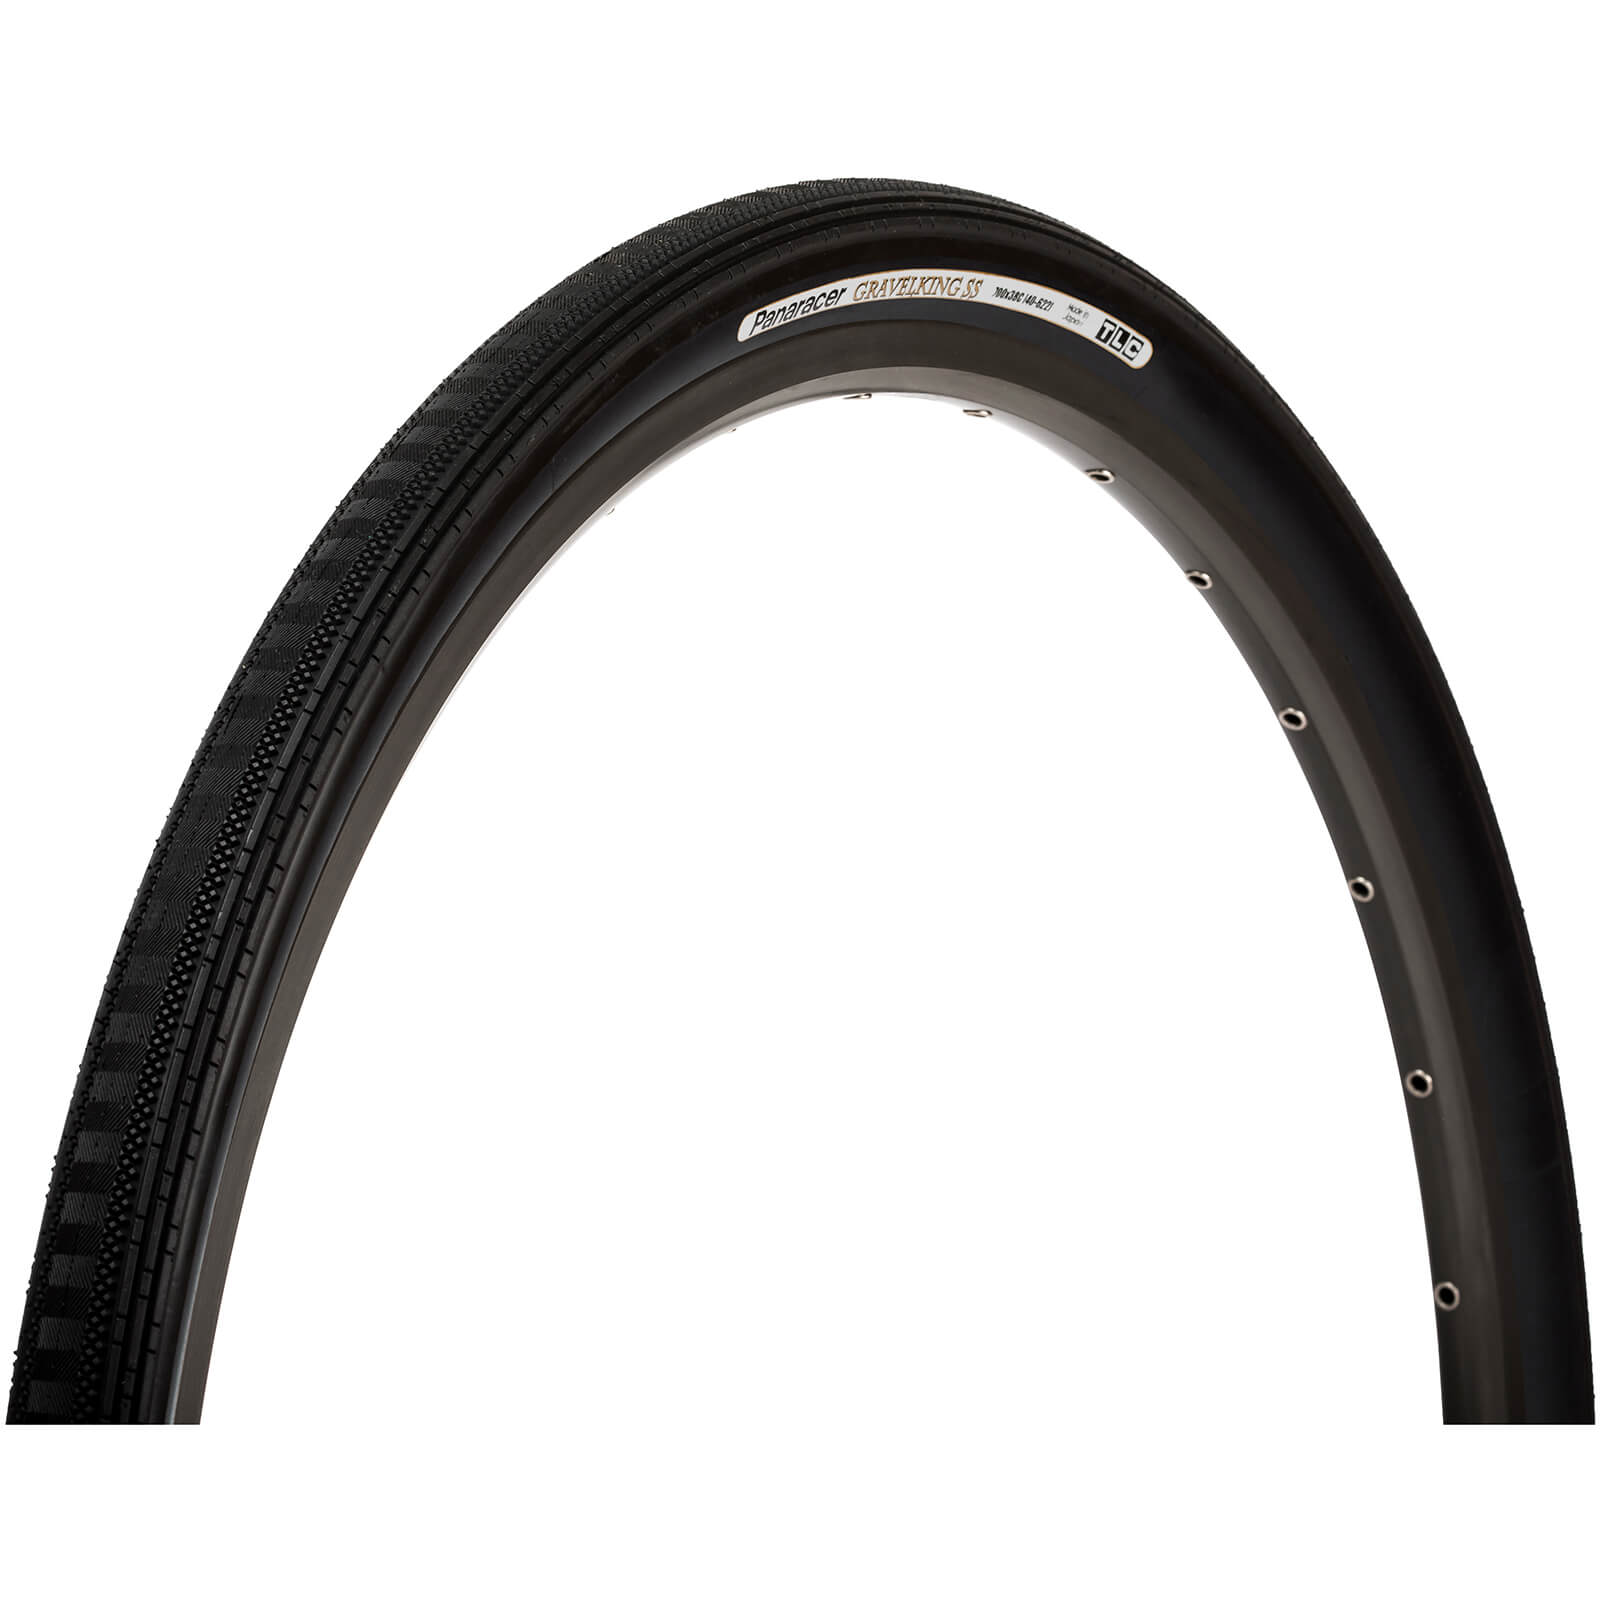 Panaracer Gravel King Semi Slick Gravel Tyre - 700 x 38c - BLACK/BLACK